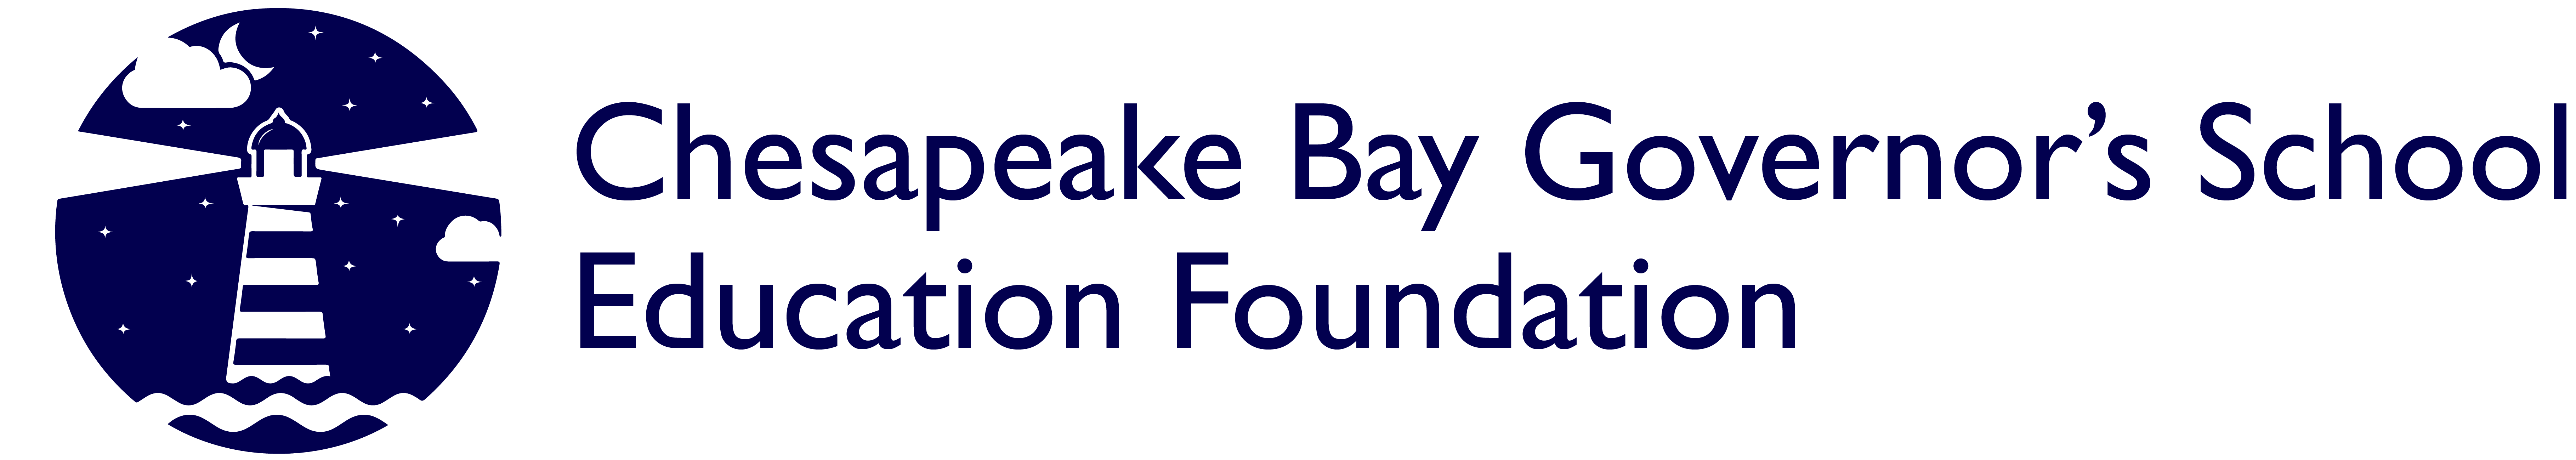 Chesapeake Bay Governor's School Education Foundation